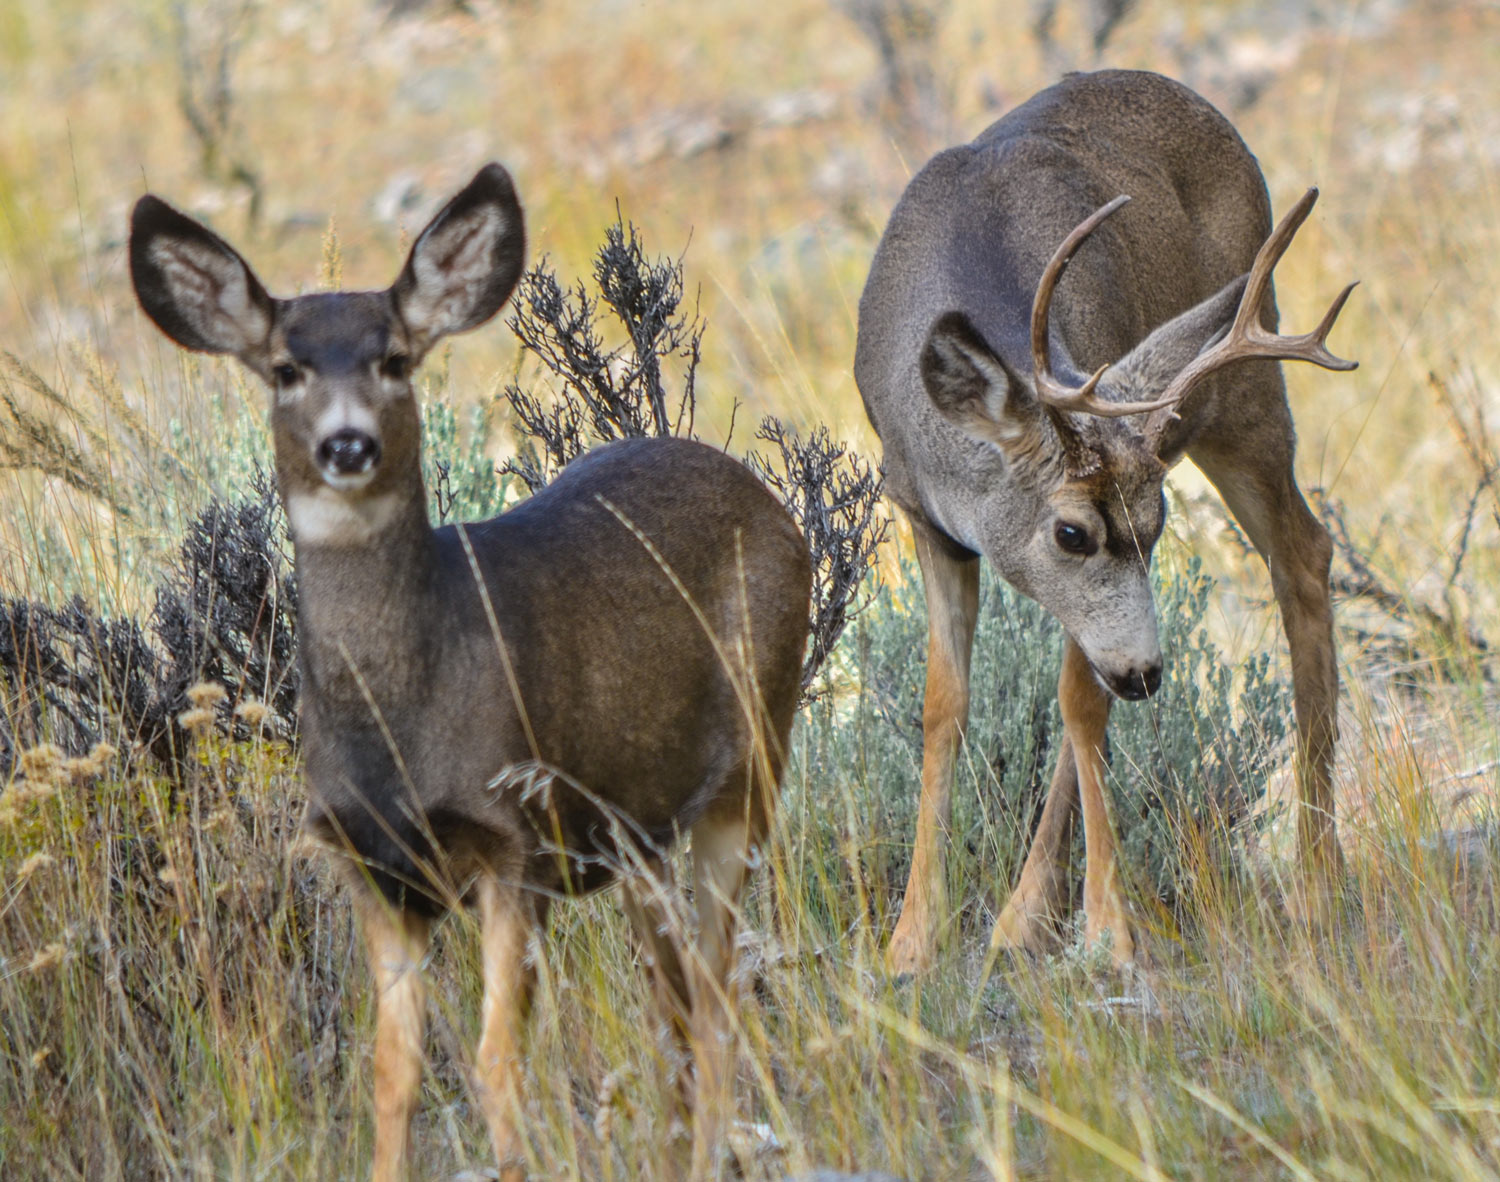 Two blacktail deer in an field.